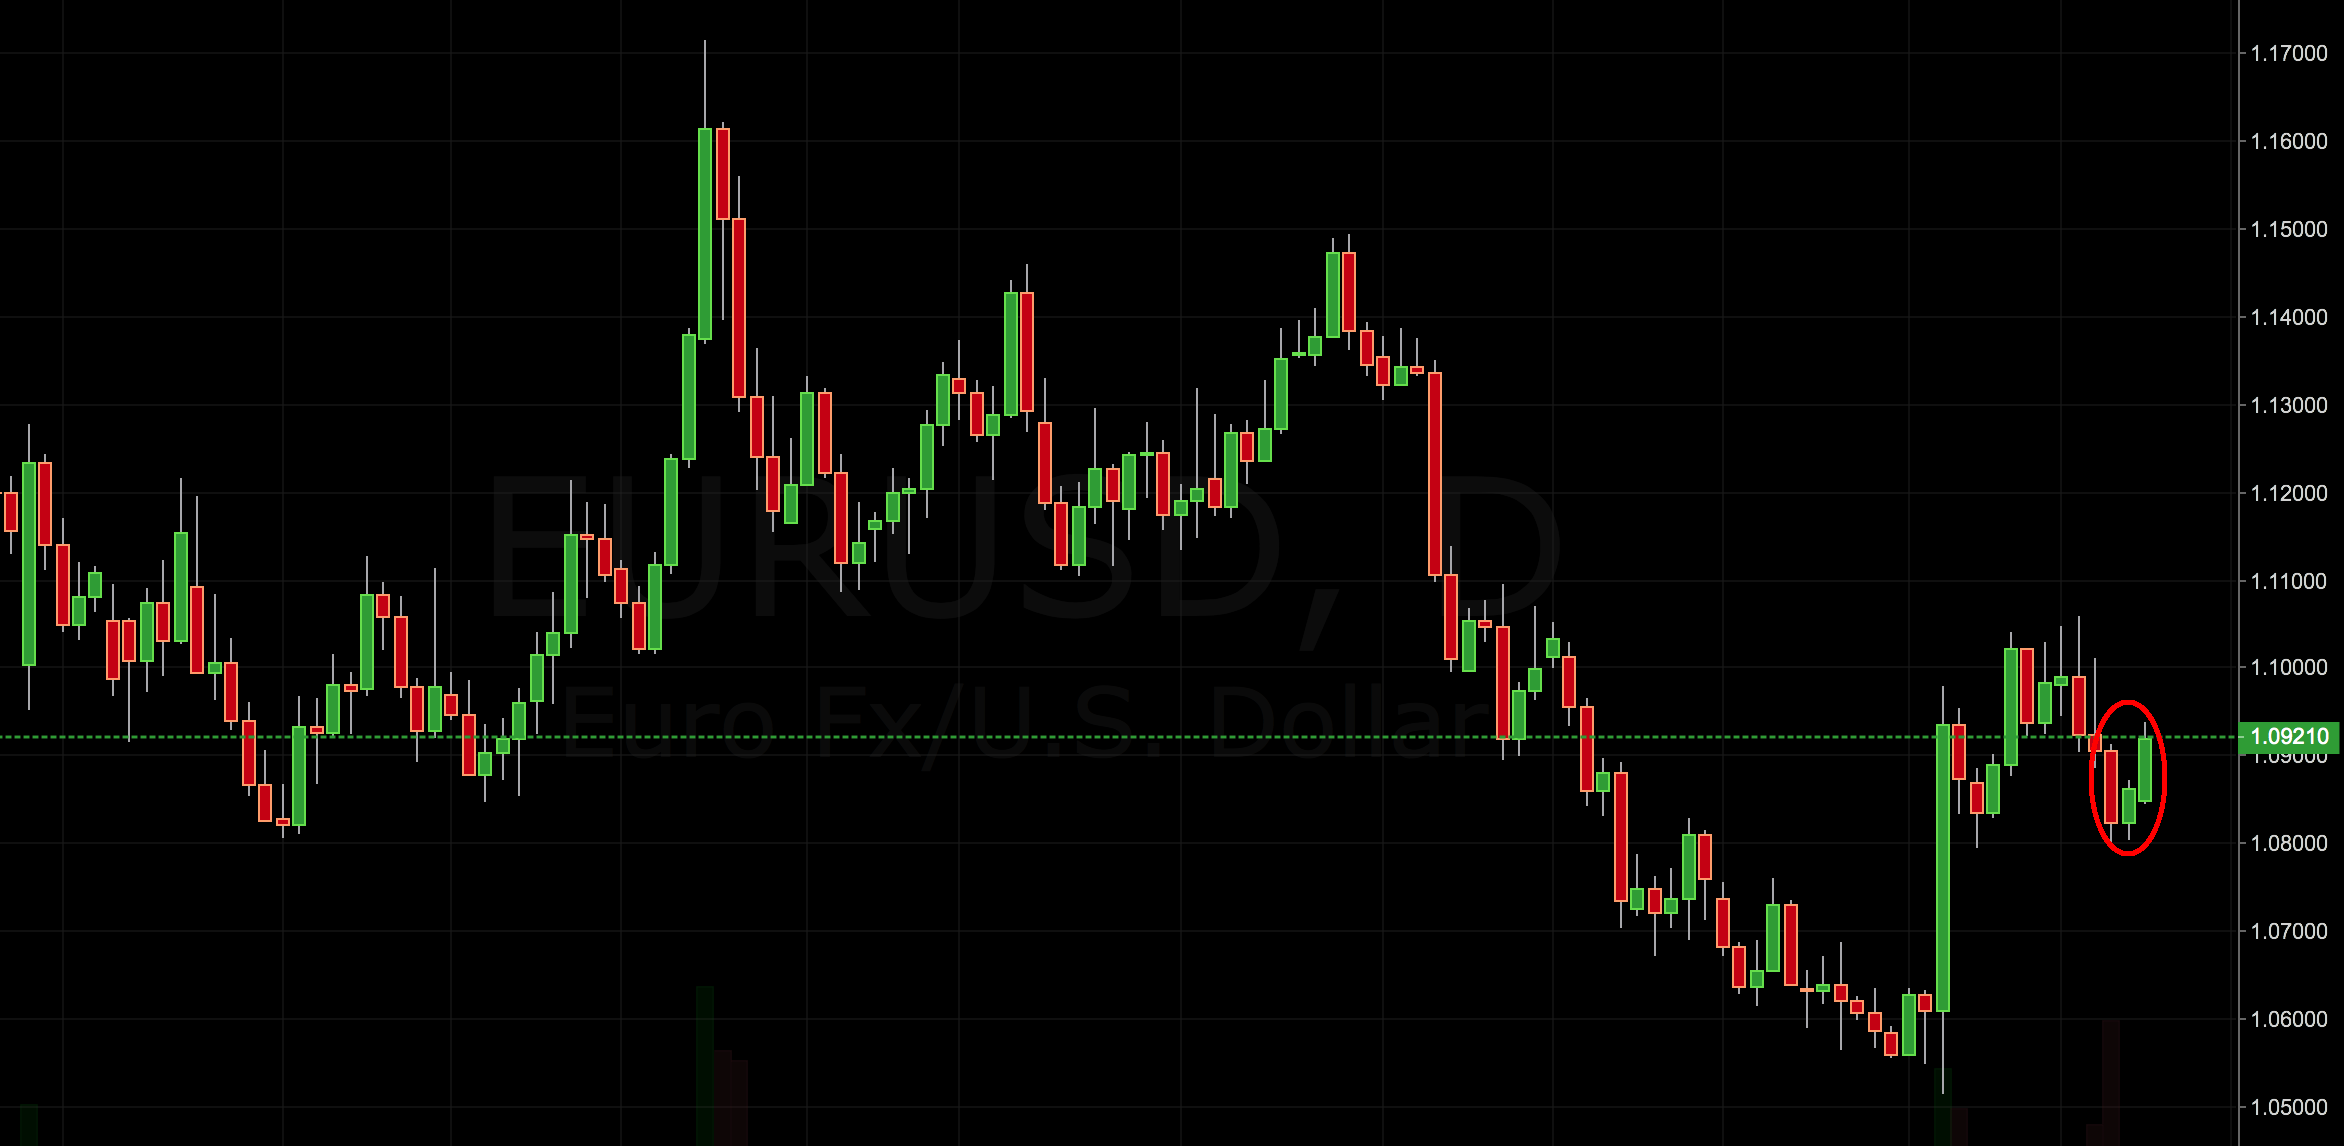 eur/usd trading signal